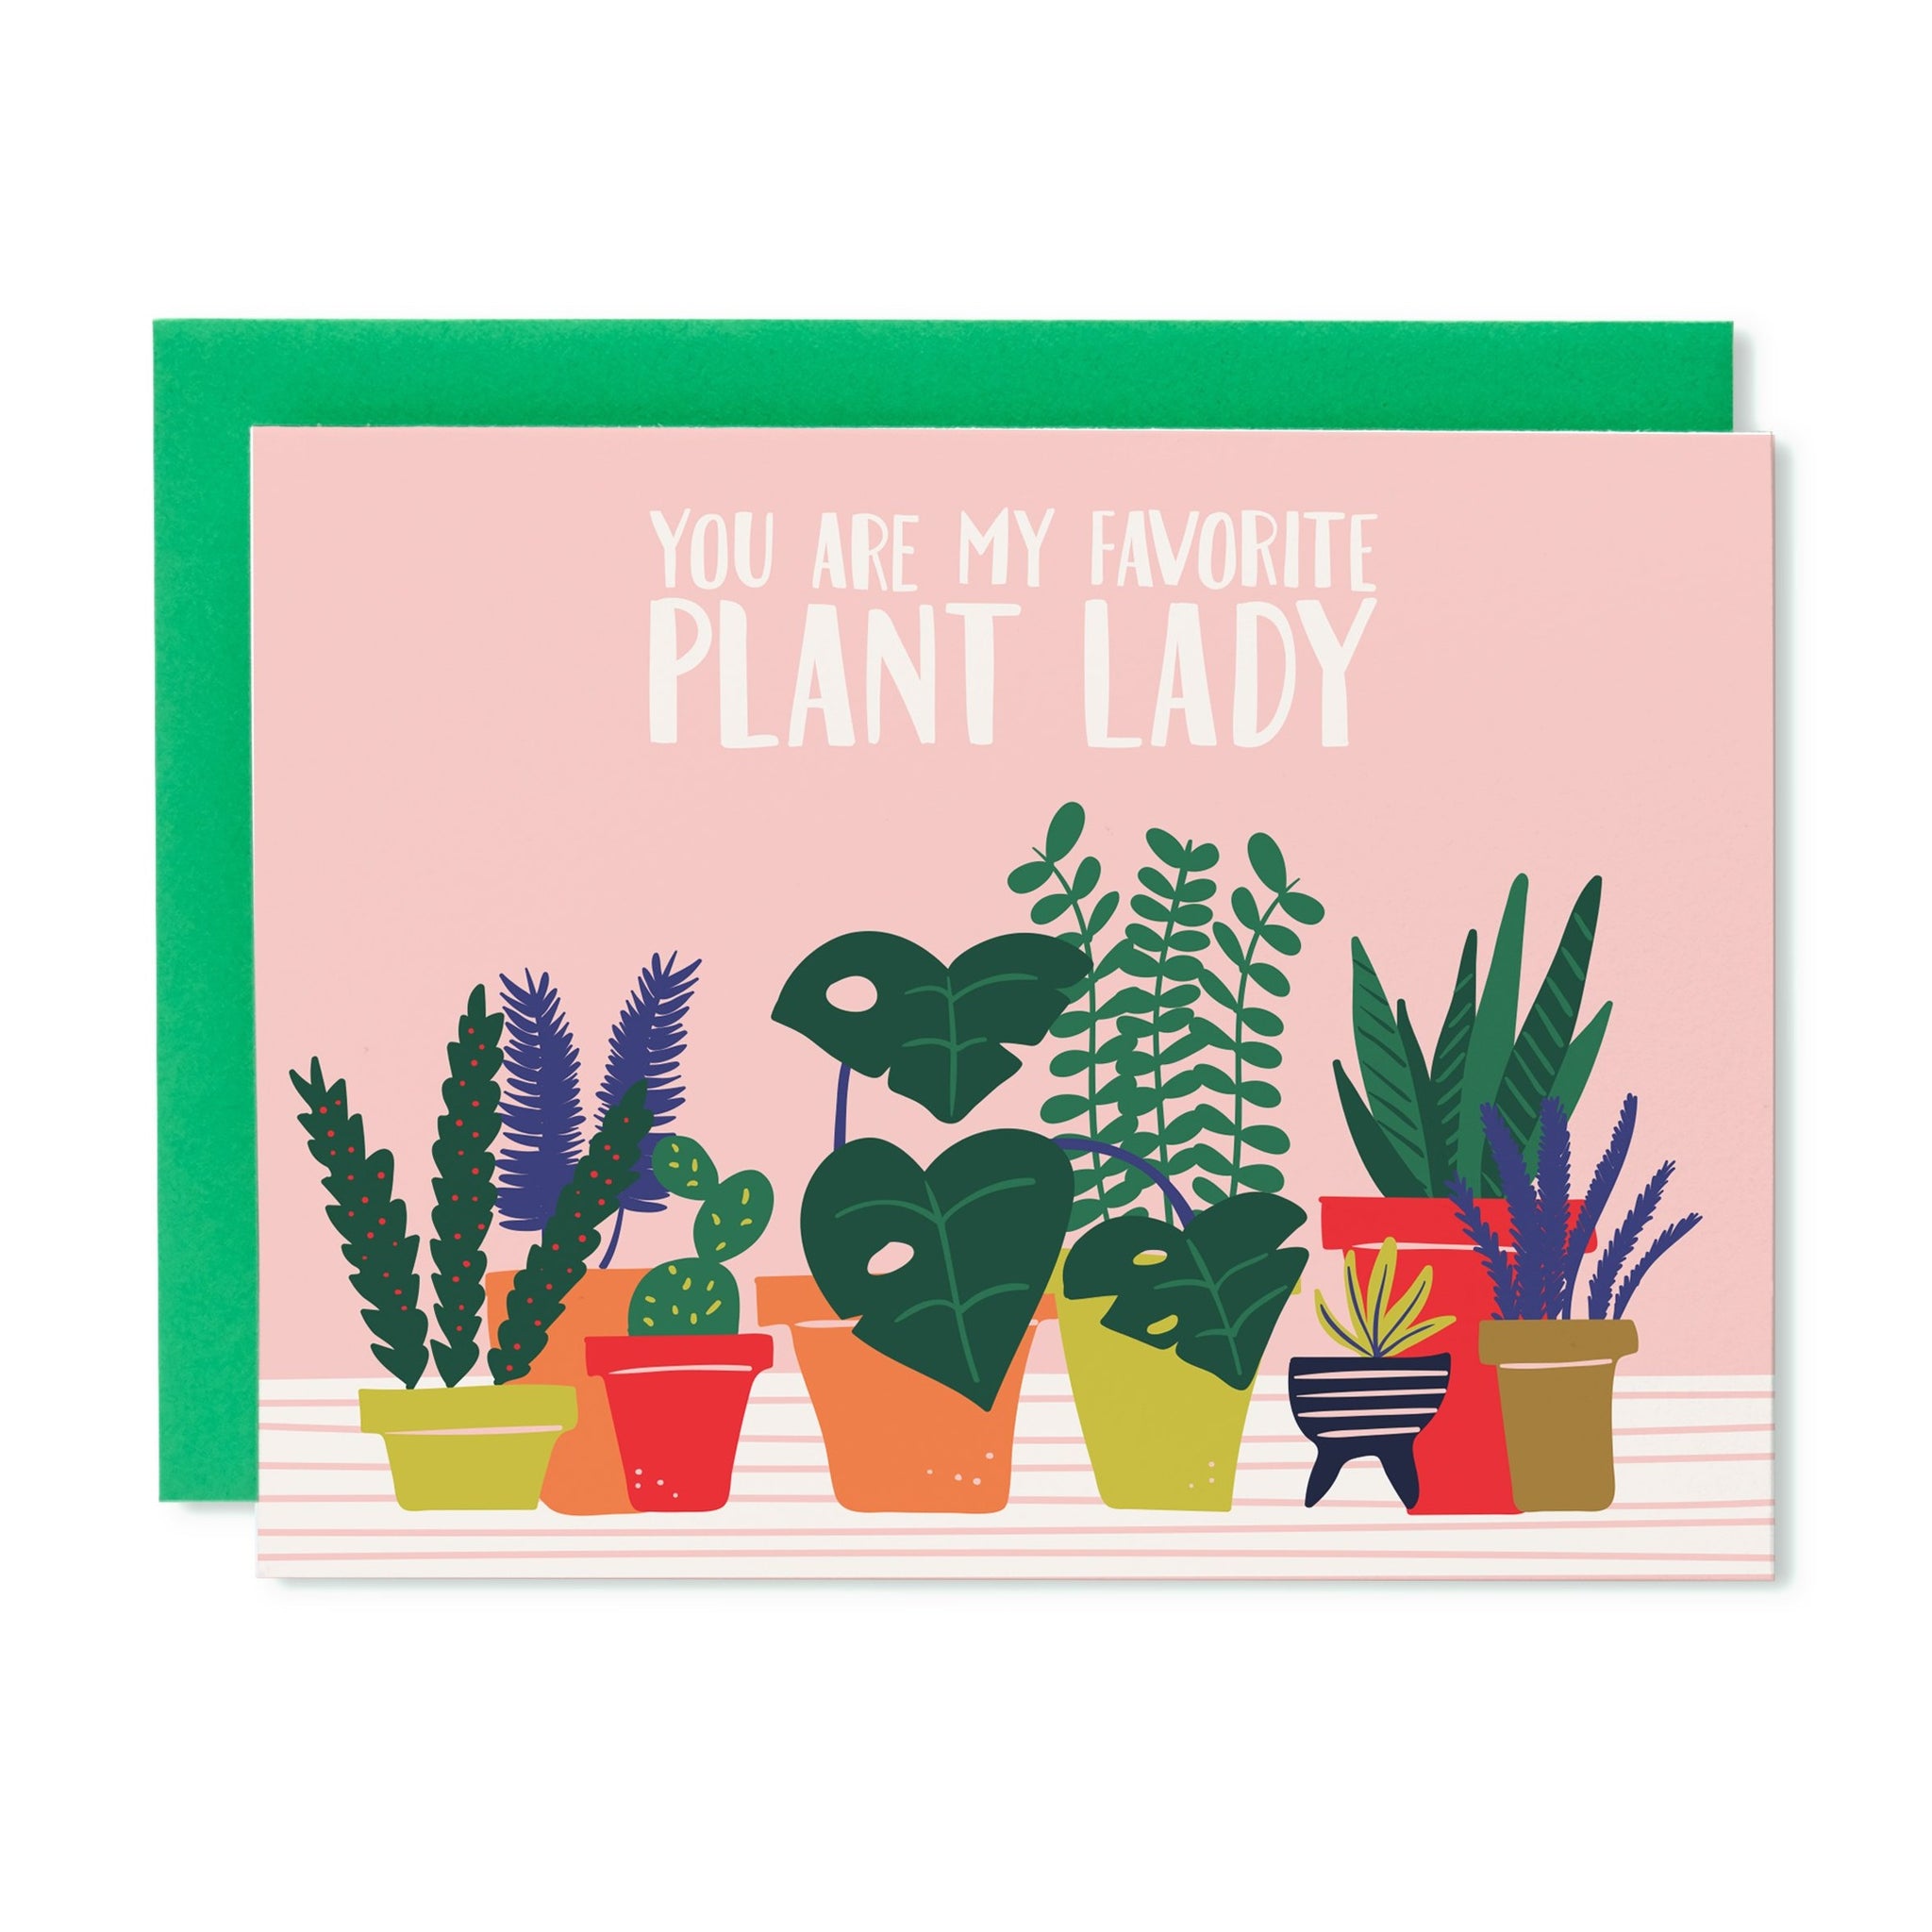 PLANT LADY - Black Lamb Shop